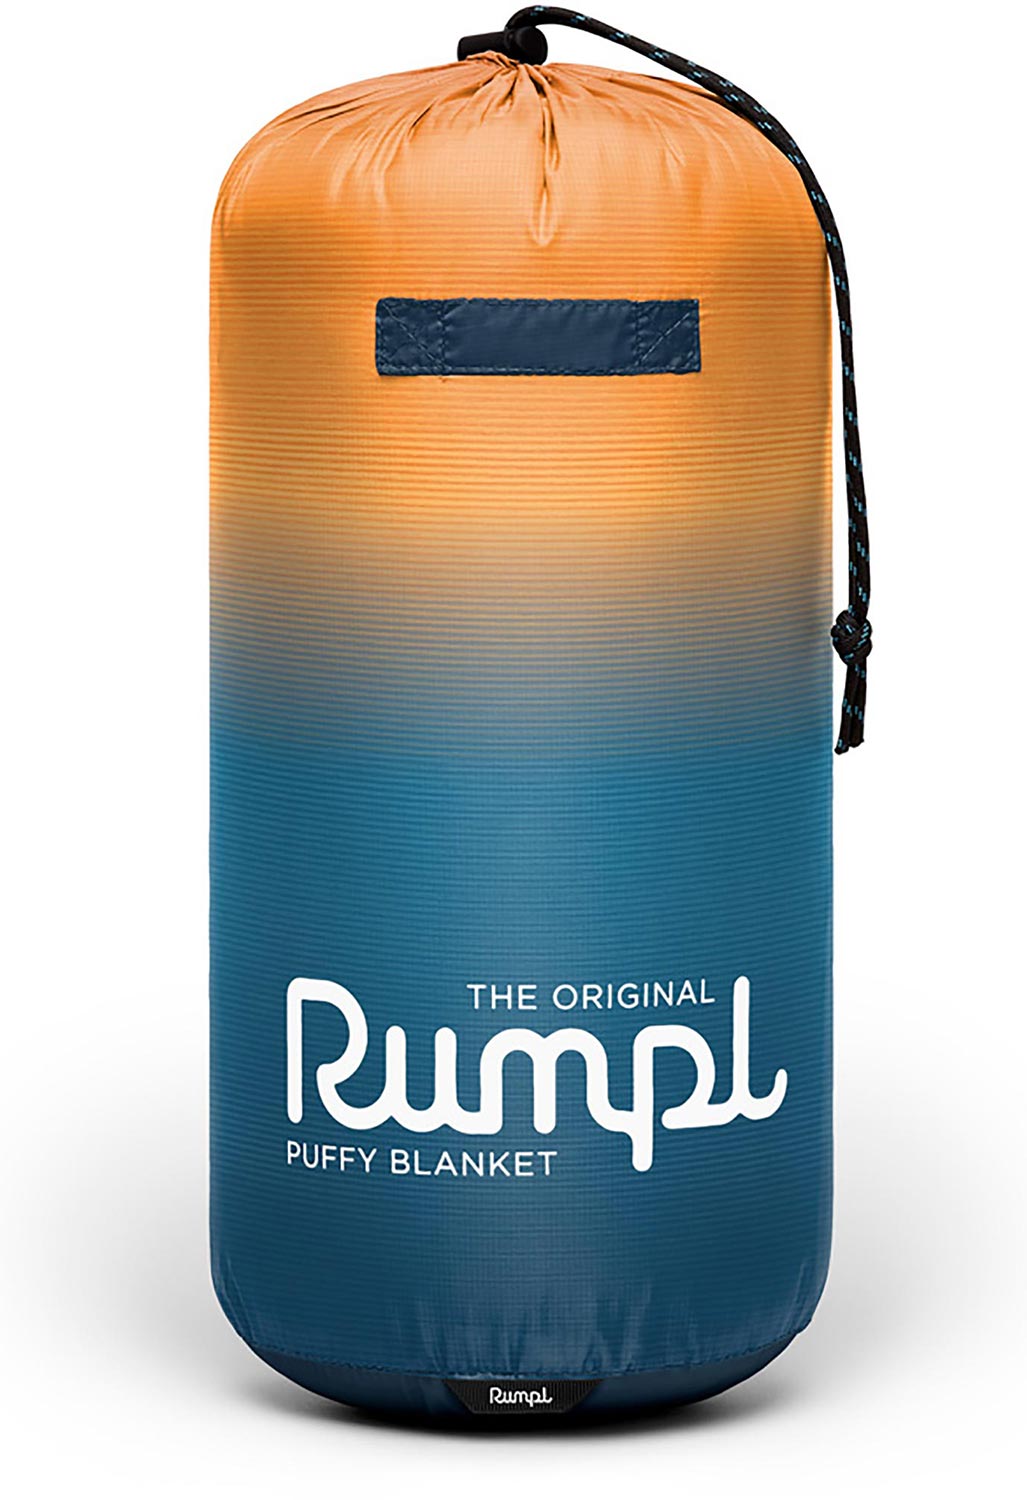 Rumpl Original Puffy Blanket 1P - Sunset Fade